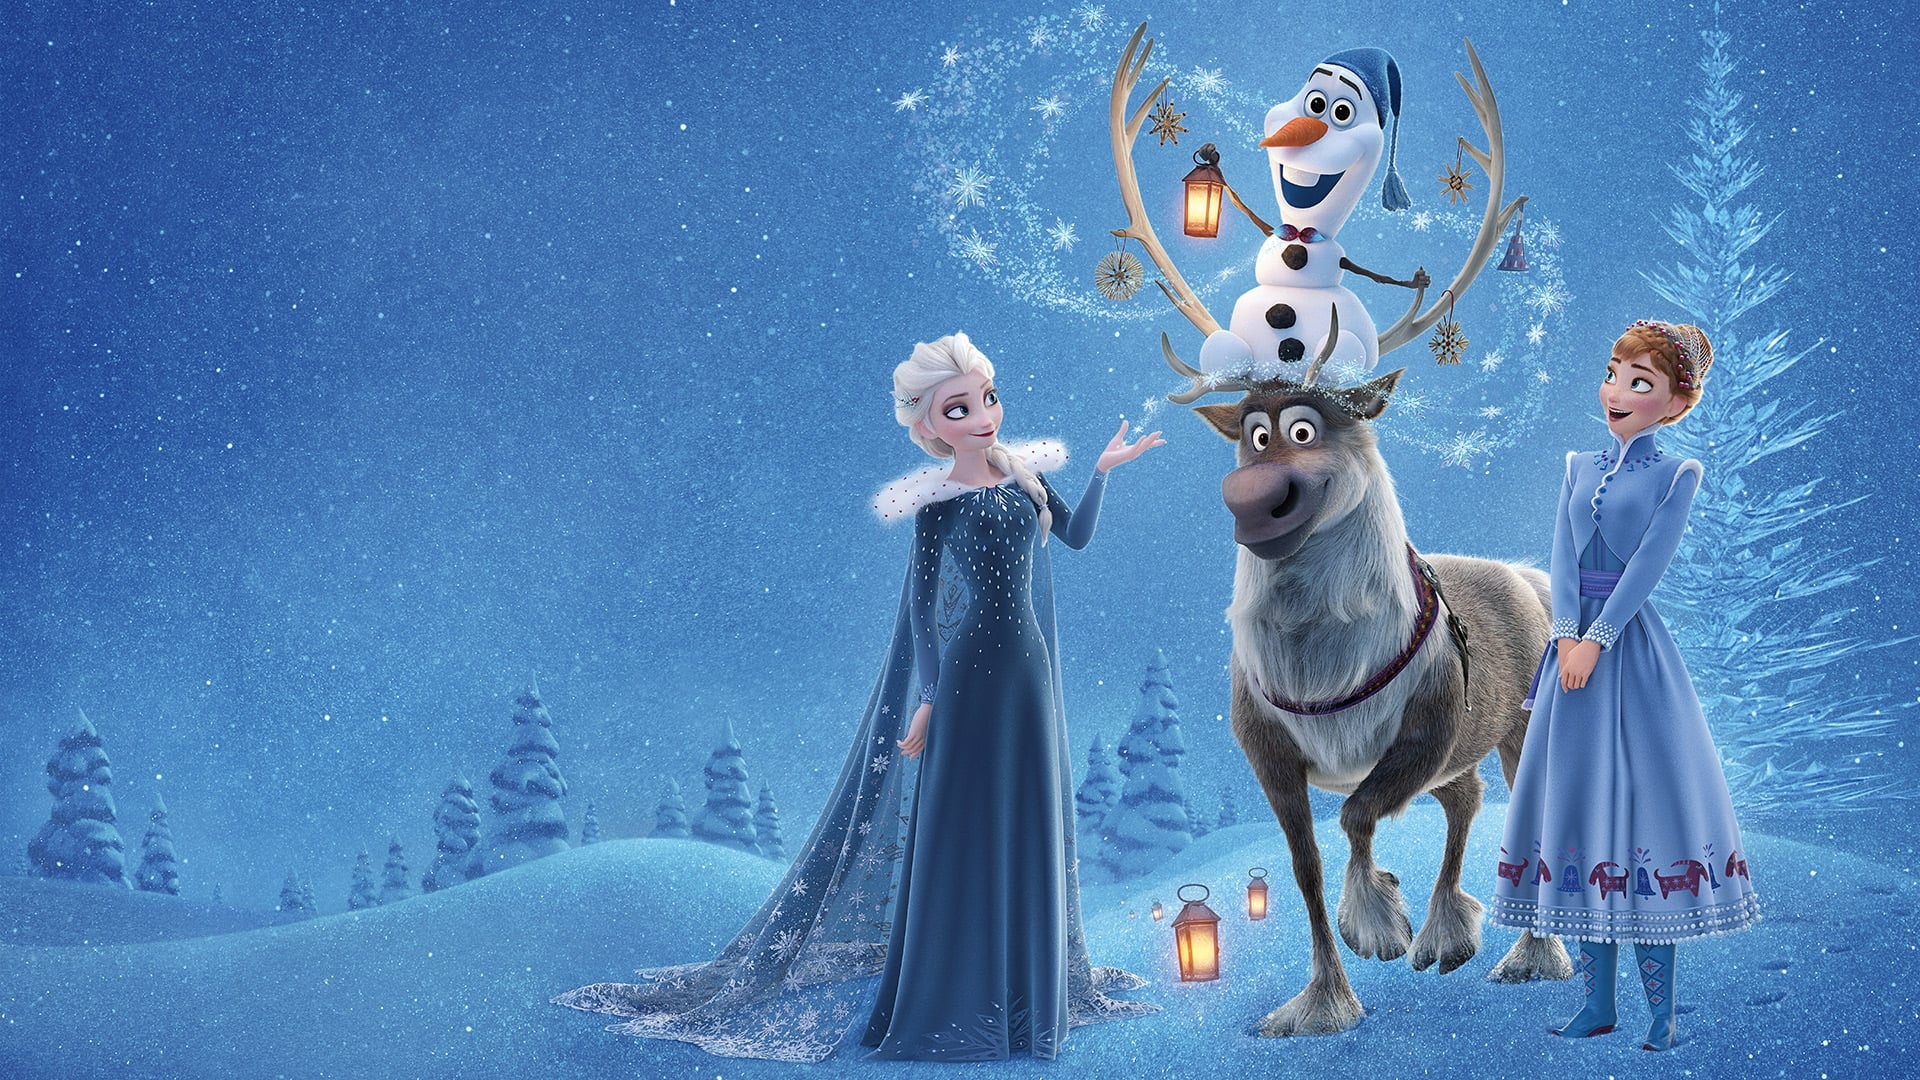 Frozen: chuyến phiêu lưu của olaf - Olaf's frozen adventure